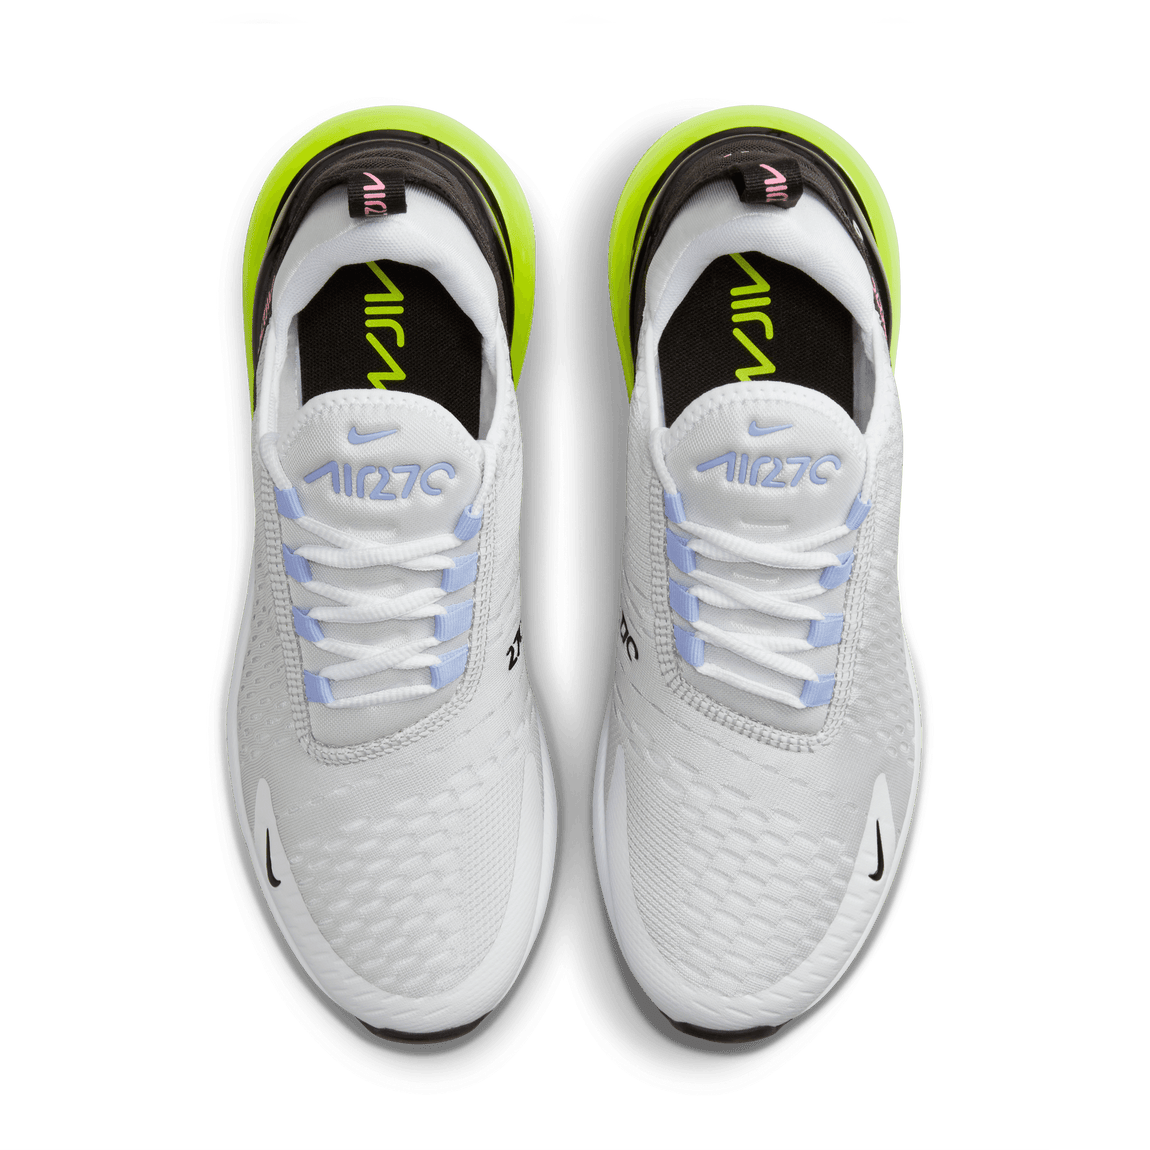 Nike Women's Size 6.5 Air Max 270 Shoes - White - Each